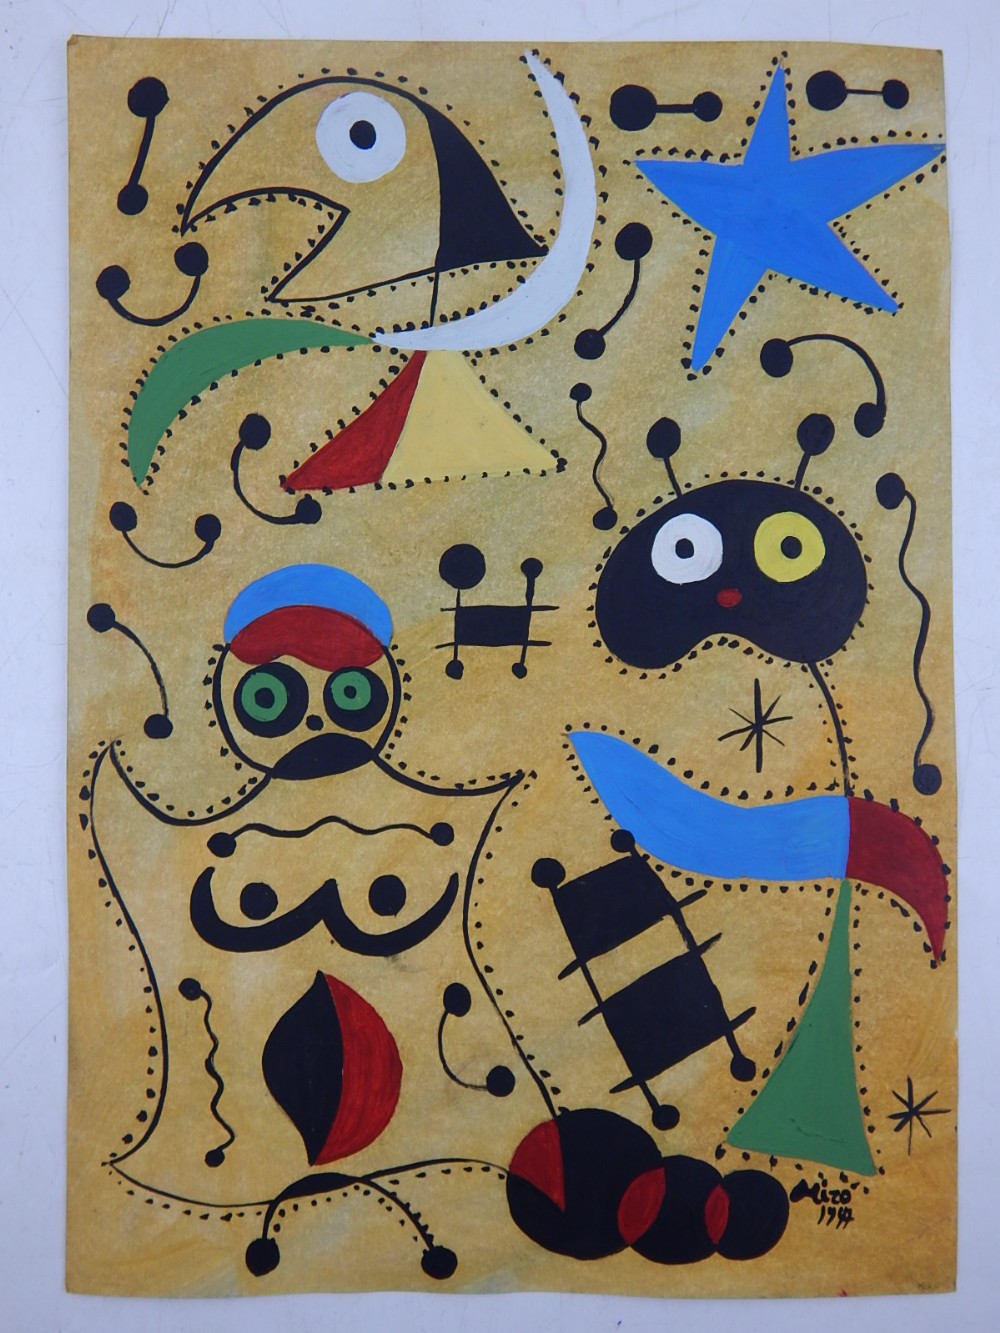 Oil on paper abstract signed Miro - dated 1947 & Titled la mujer y el hijo en la noche.